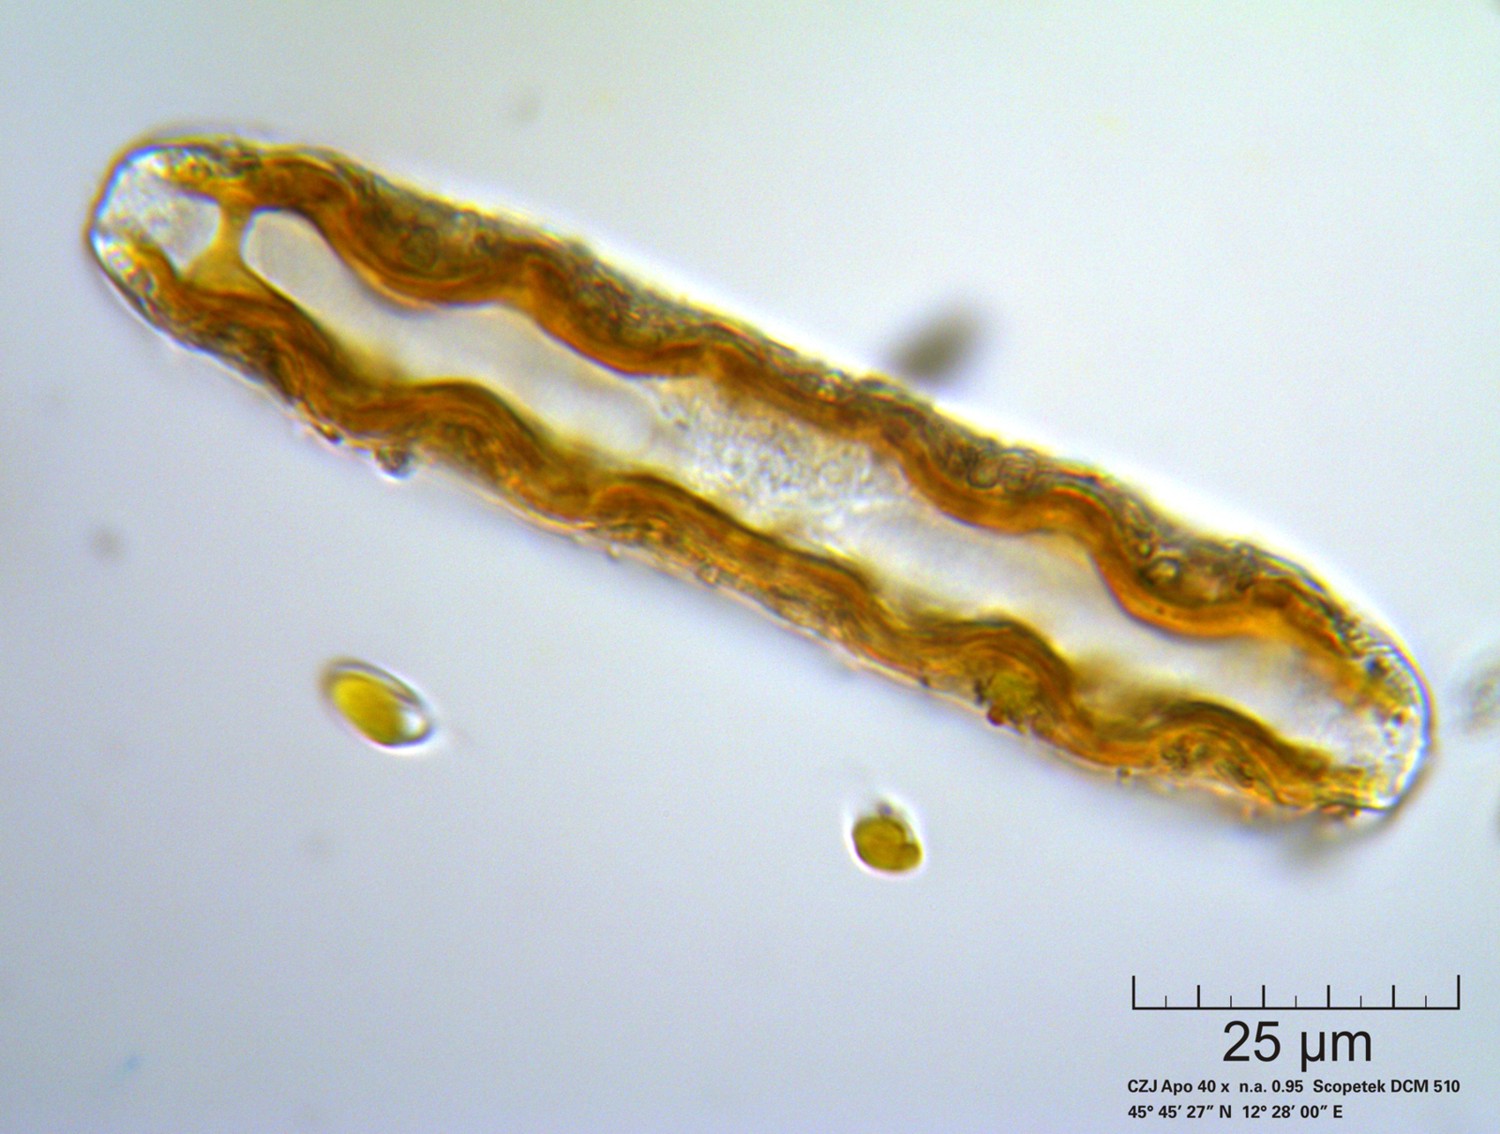 Diatomea - Cymatopleura solea